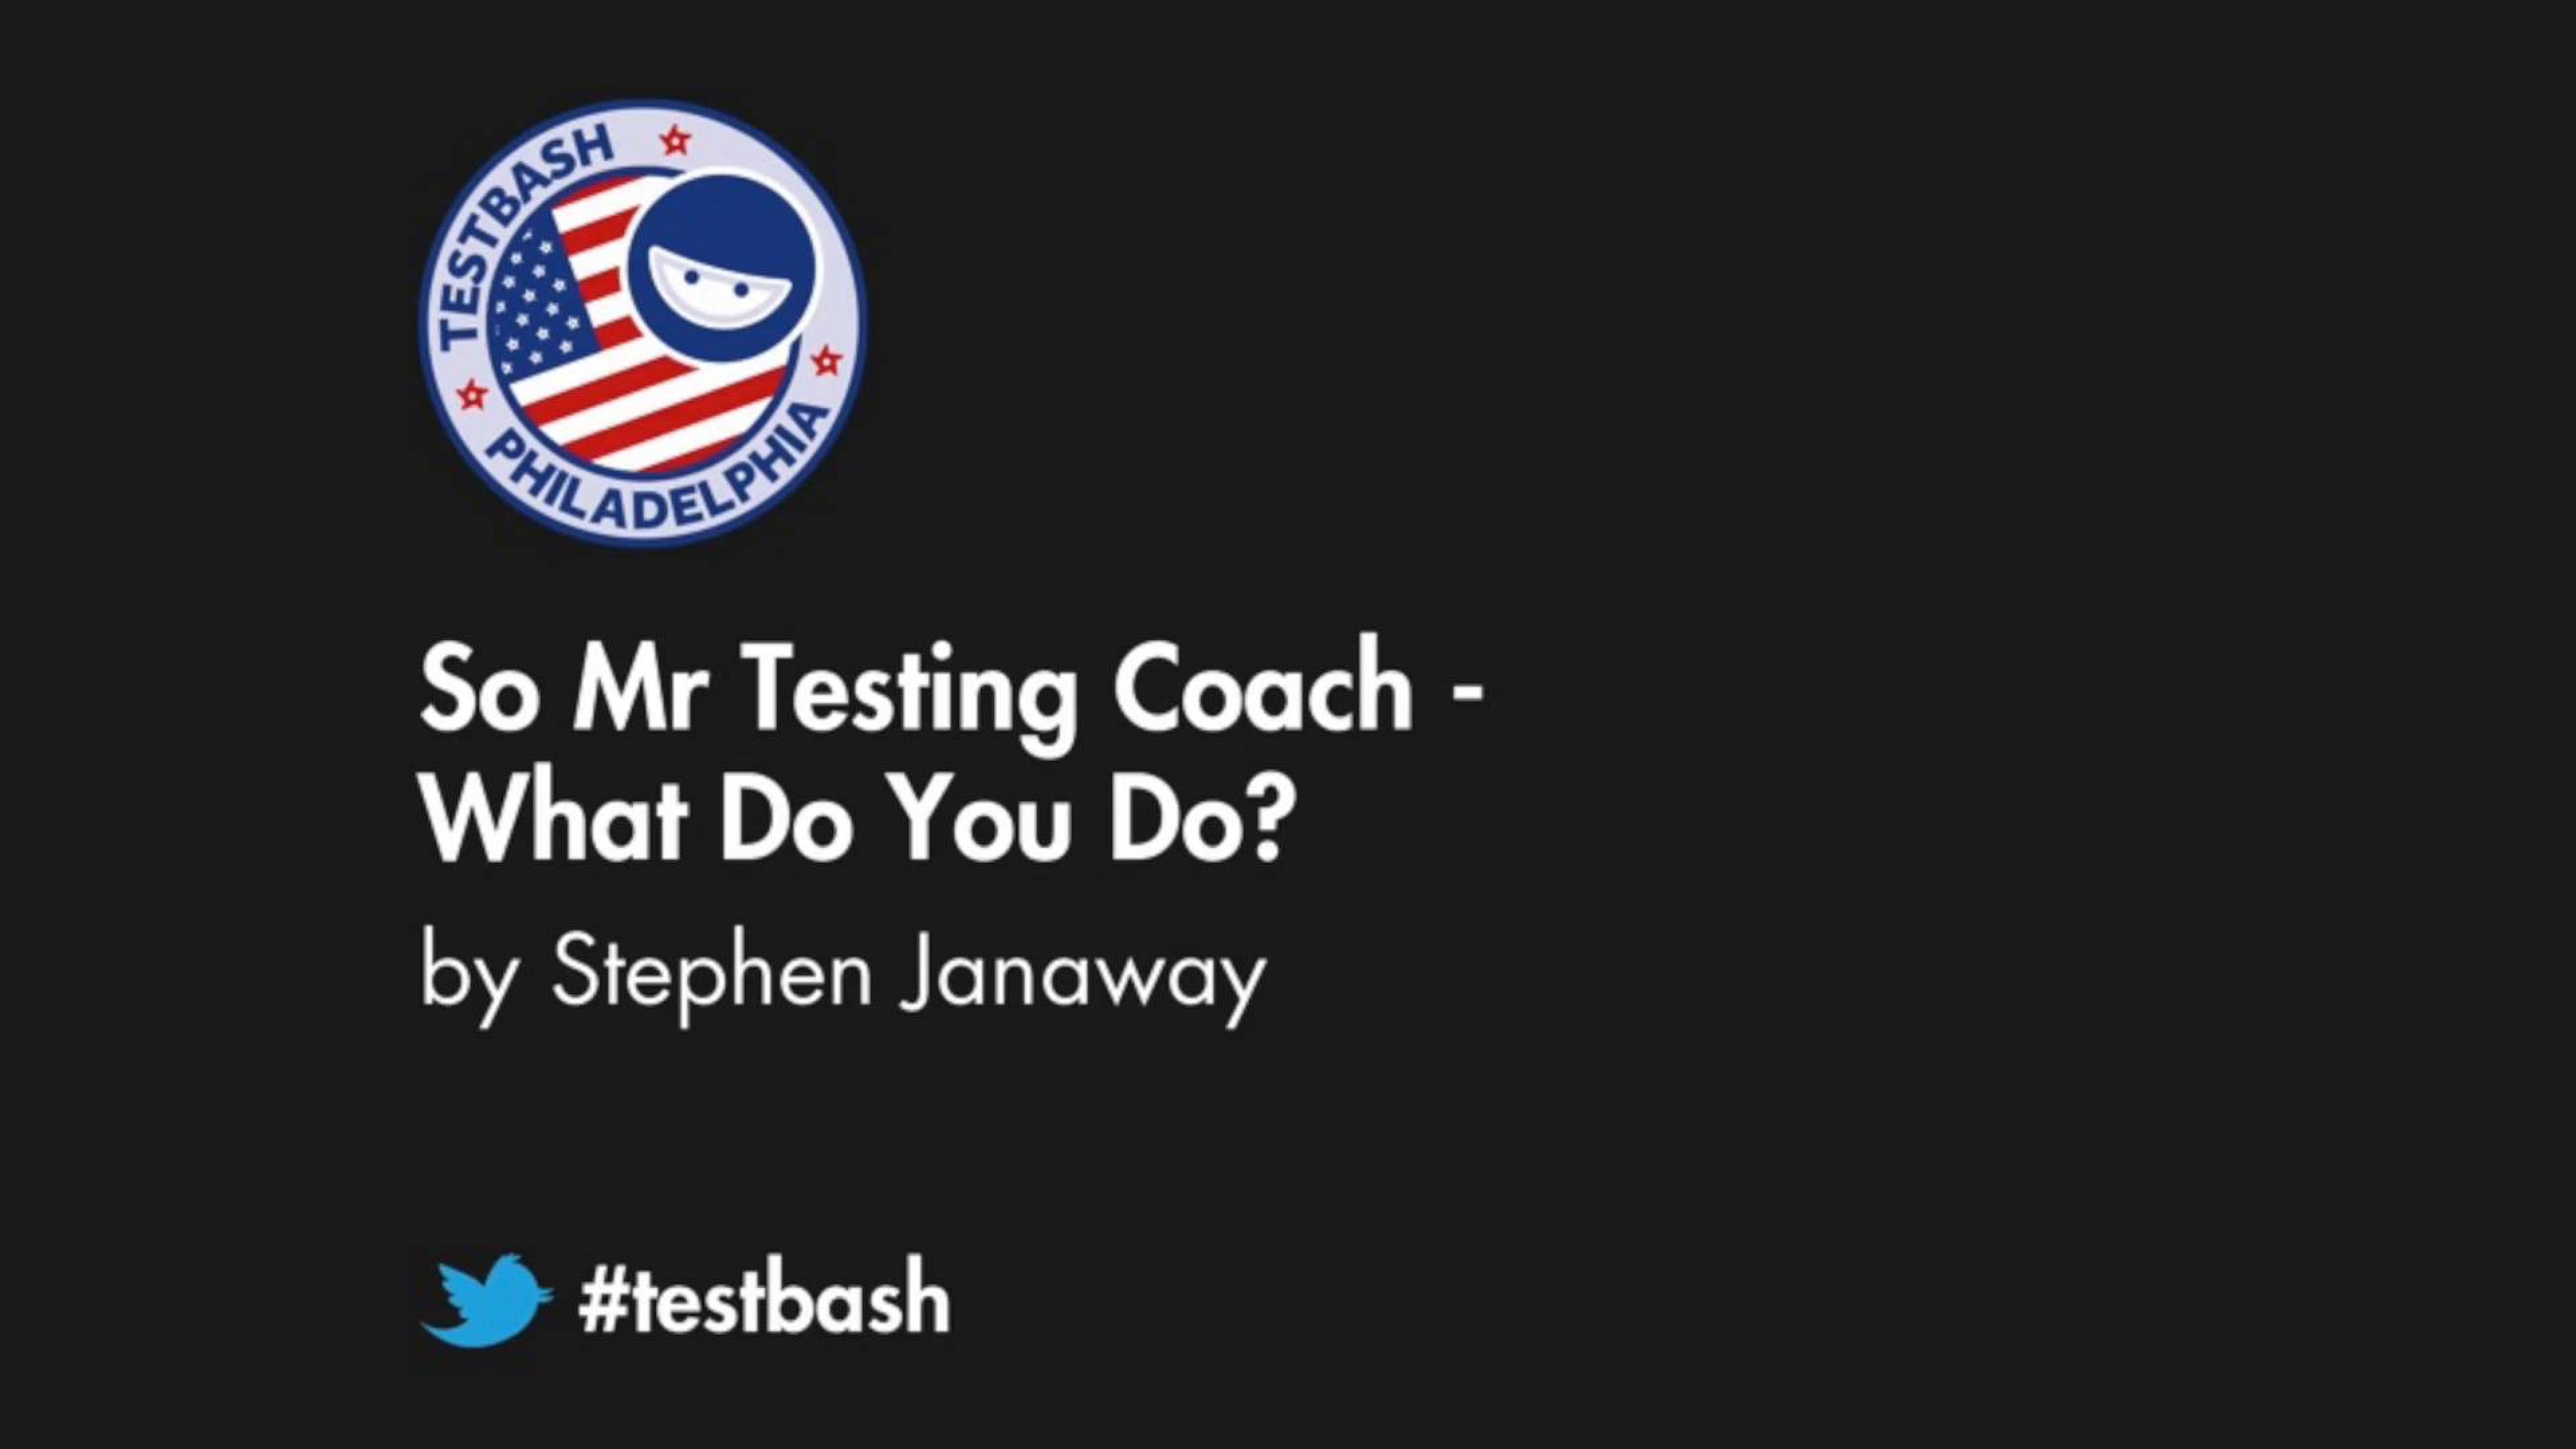 So Mr Testing Coach, What Do You Do? - Stephen Janaway